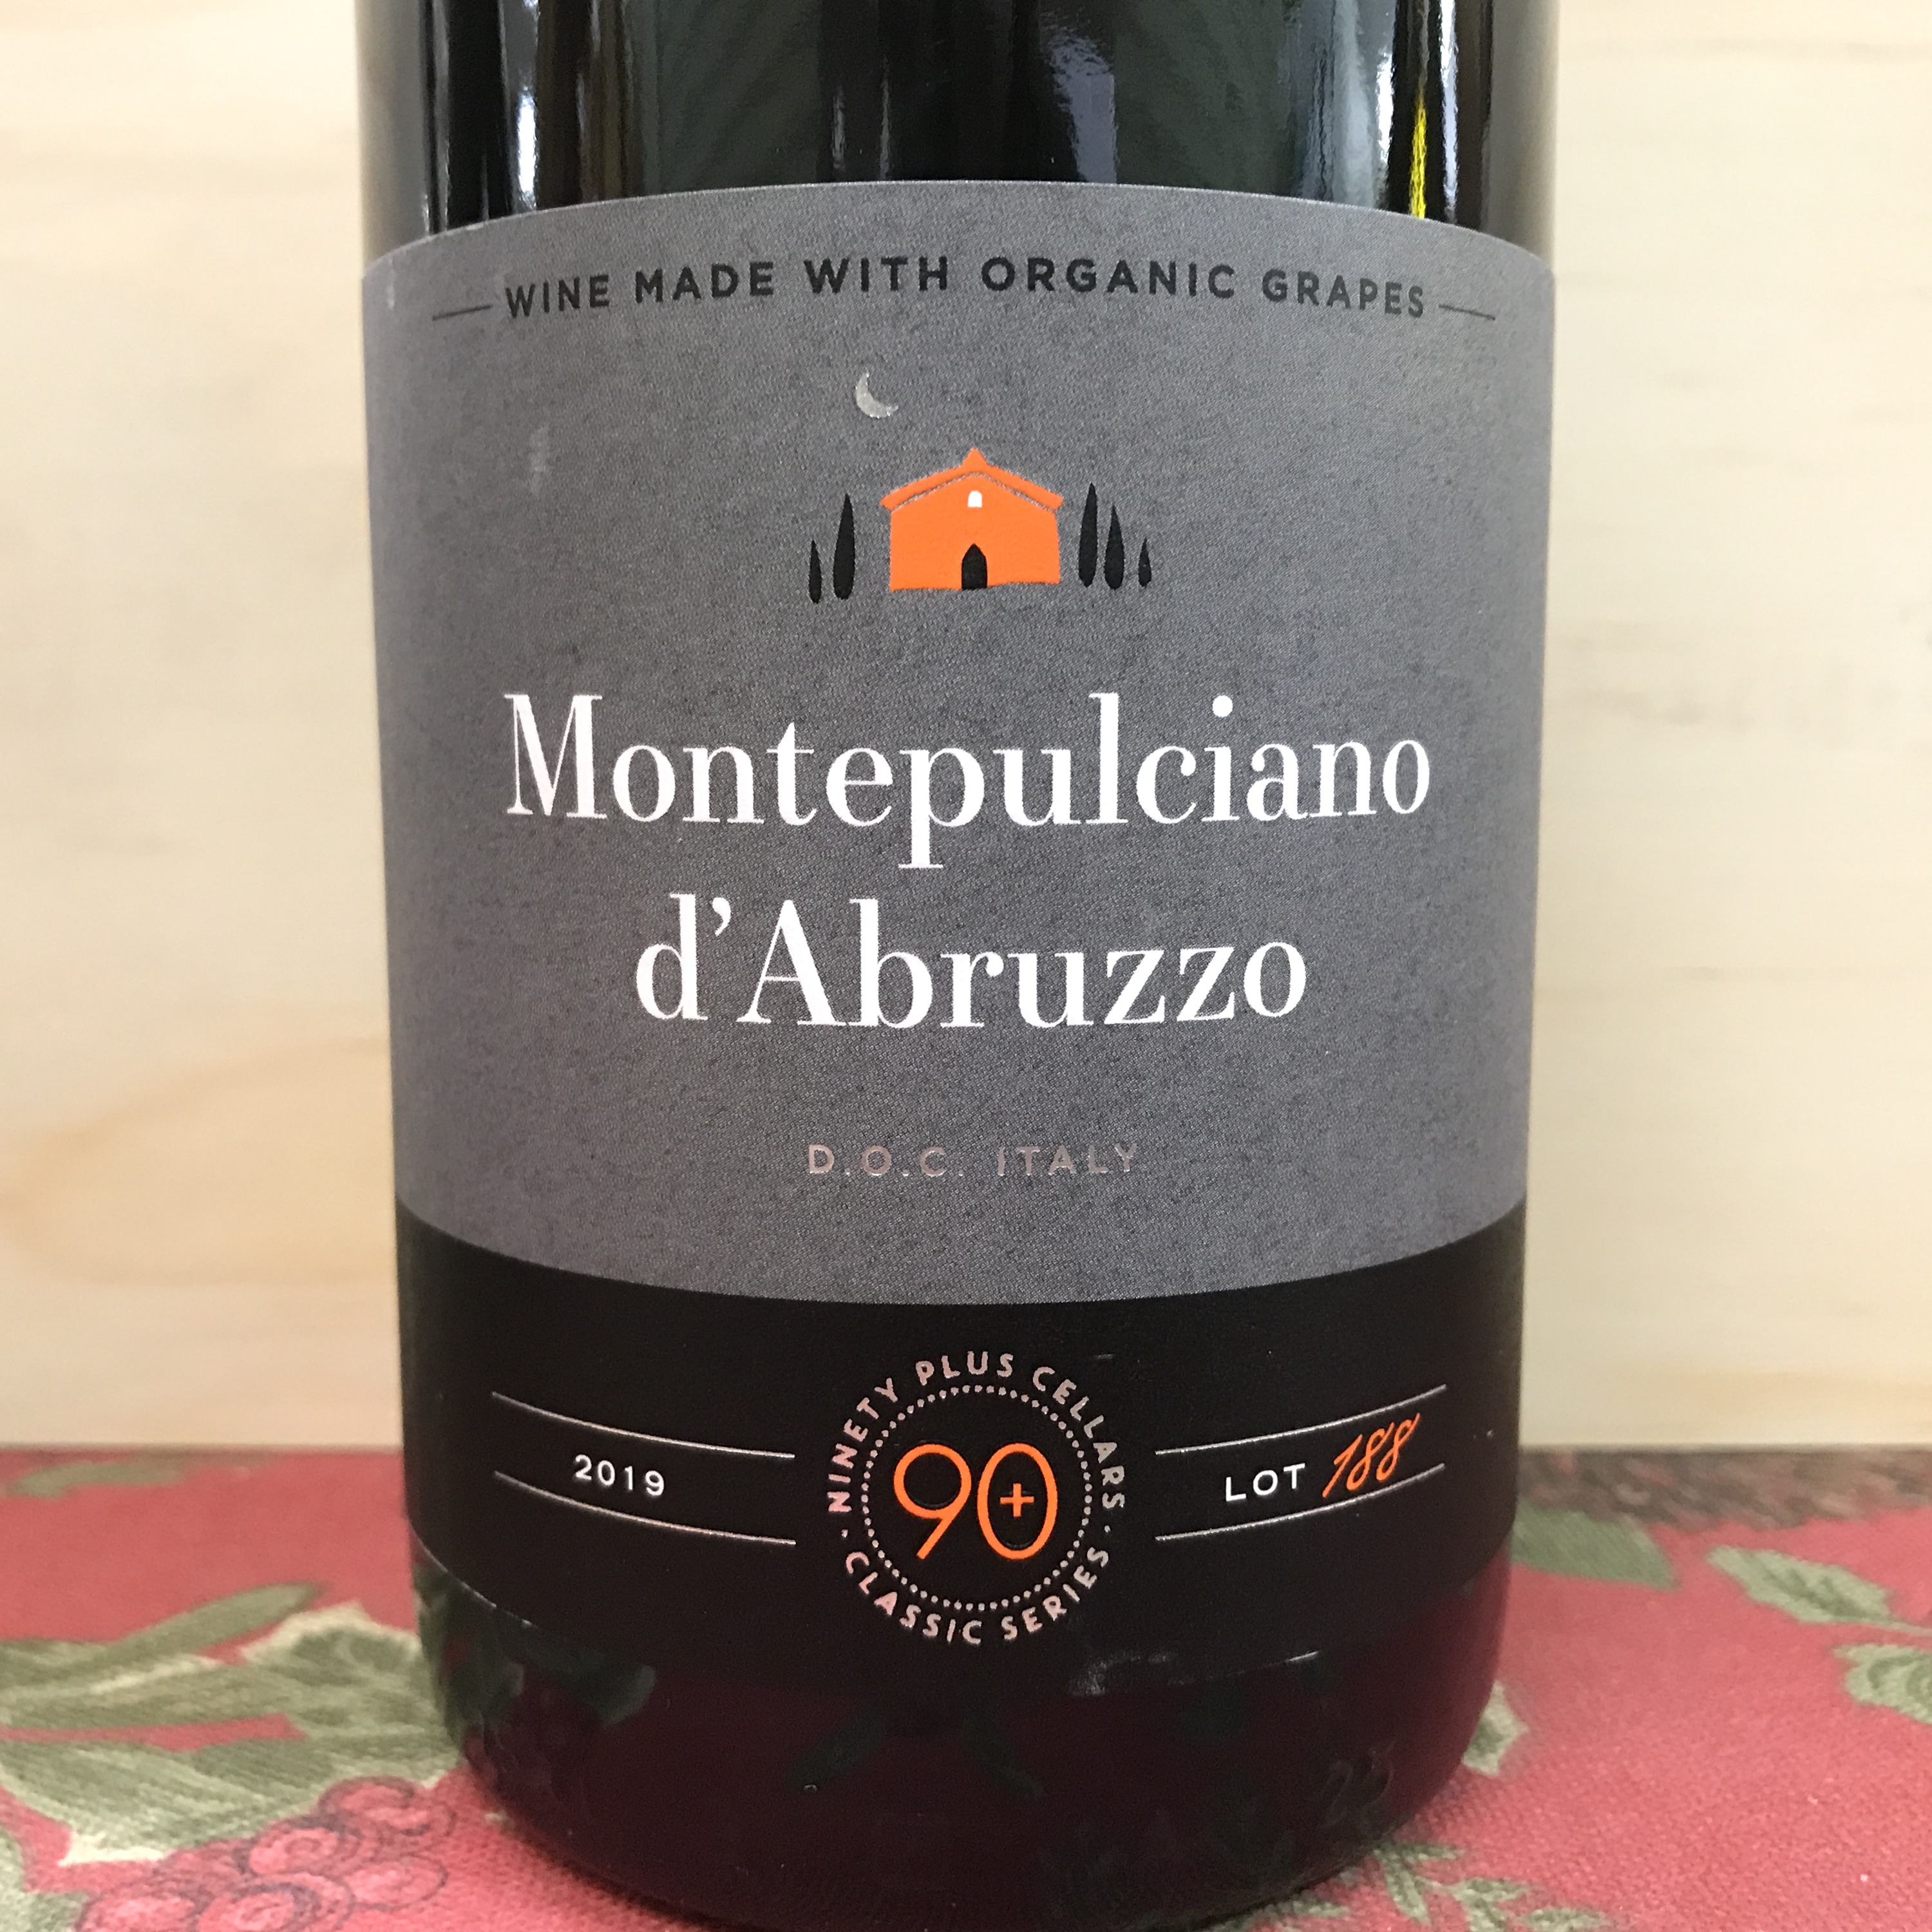 90+ Cellars Montepulciano d'Abruzzo Lot 188 2020 Organic grapes